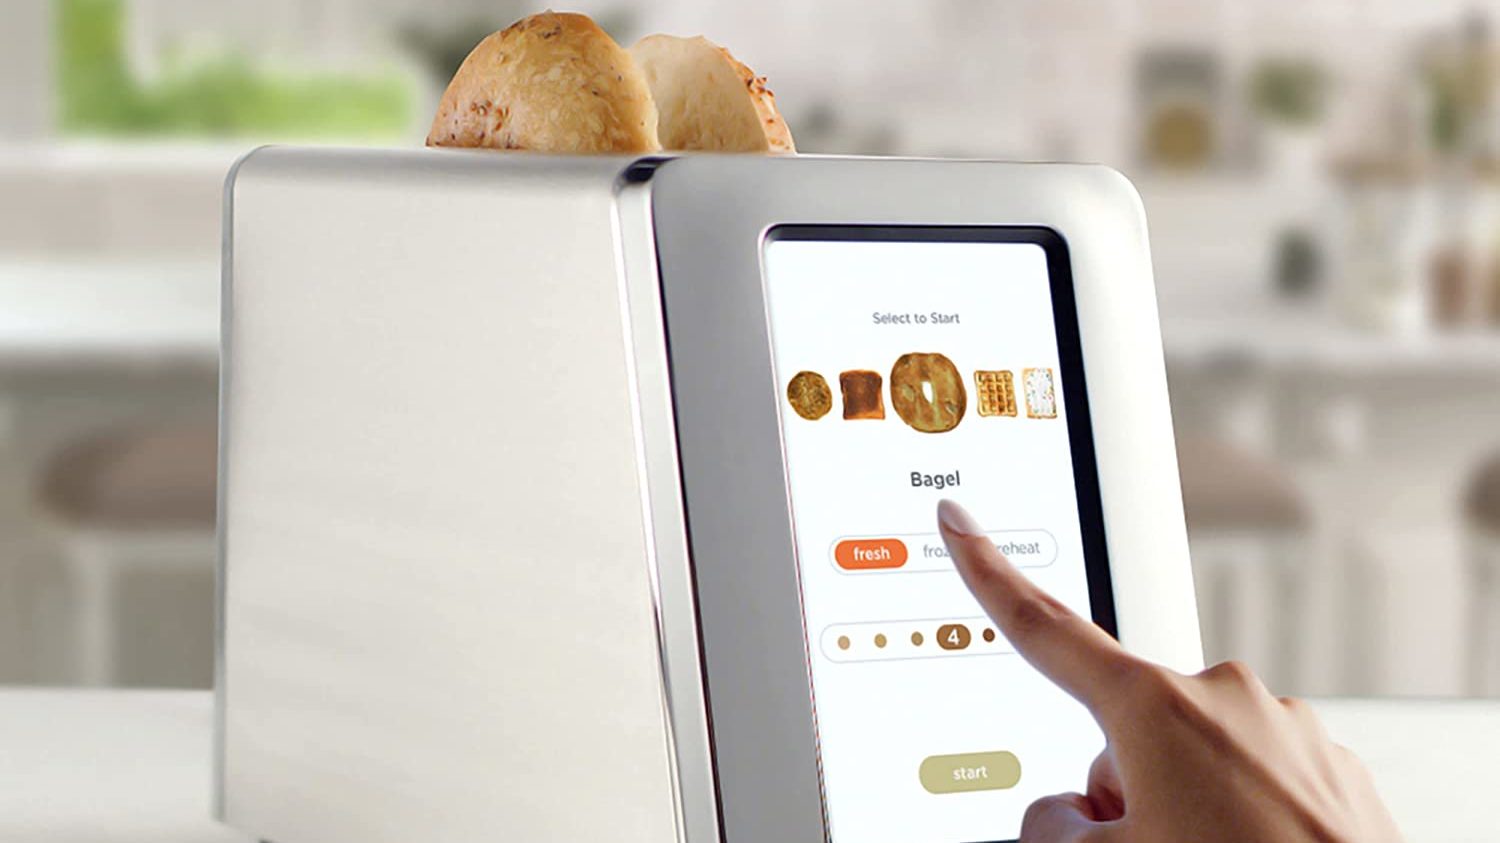 Touch-screen smart toaster on Amazon